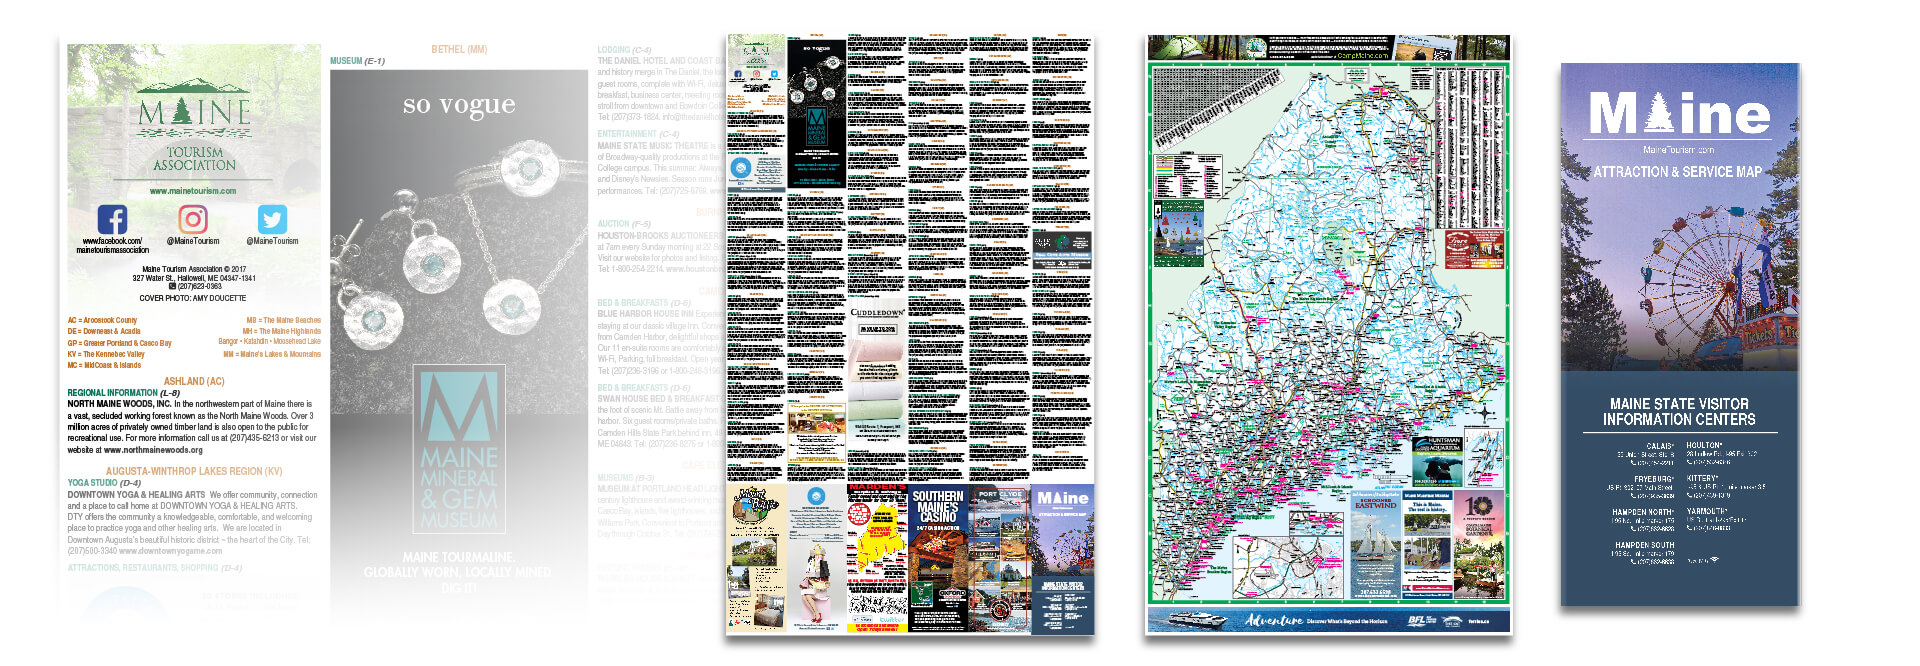 Maine Tourism Association – Attractions & Services Map